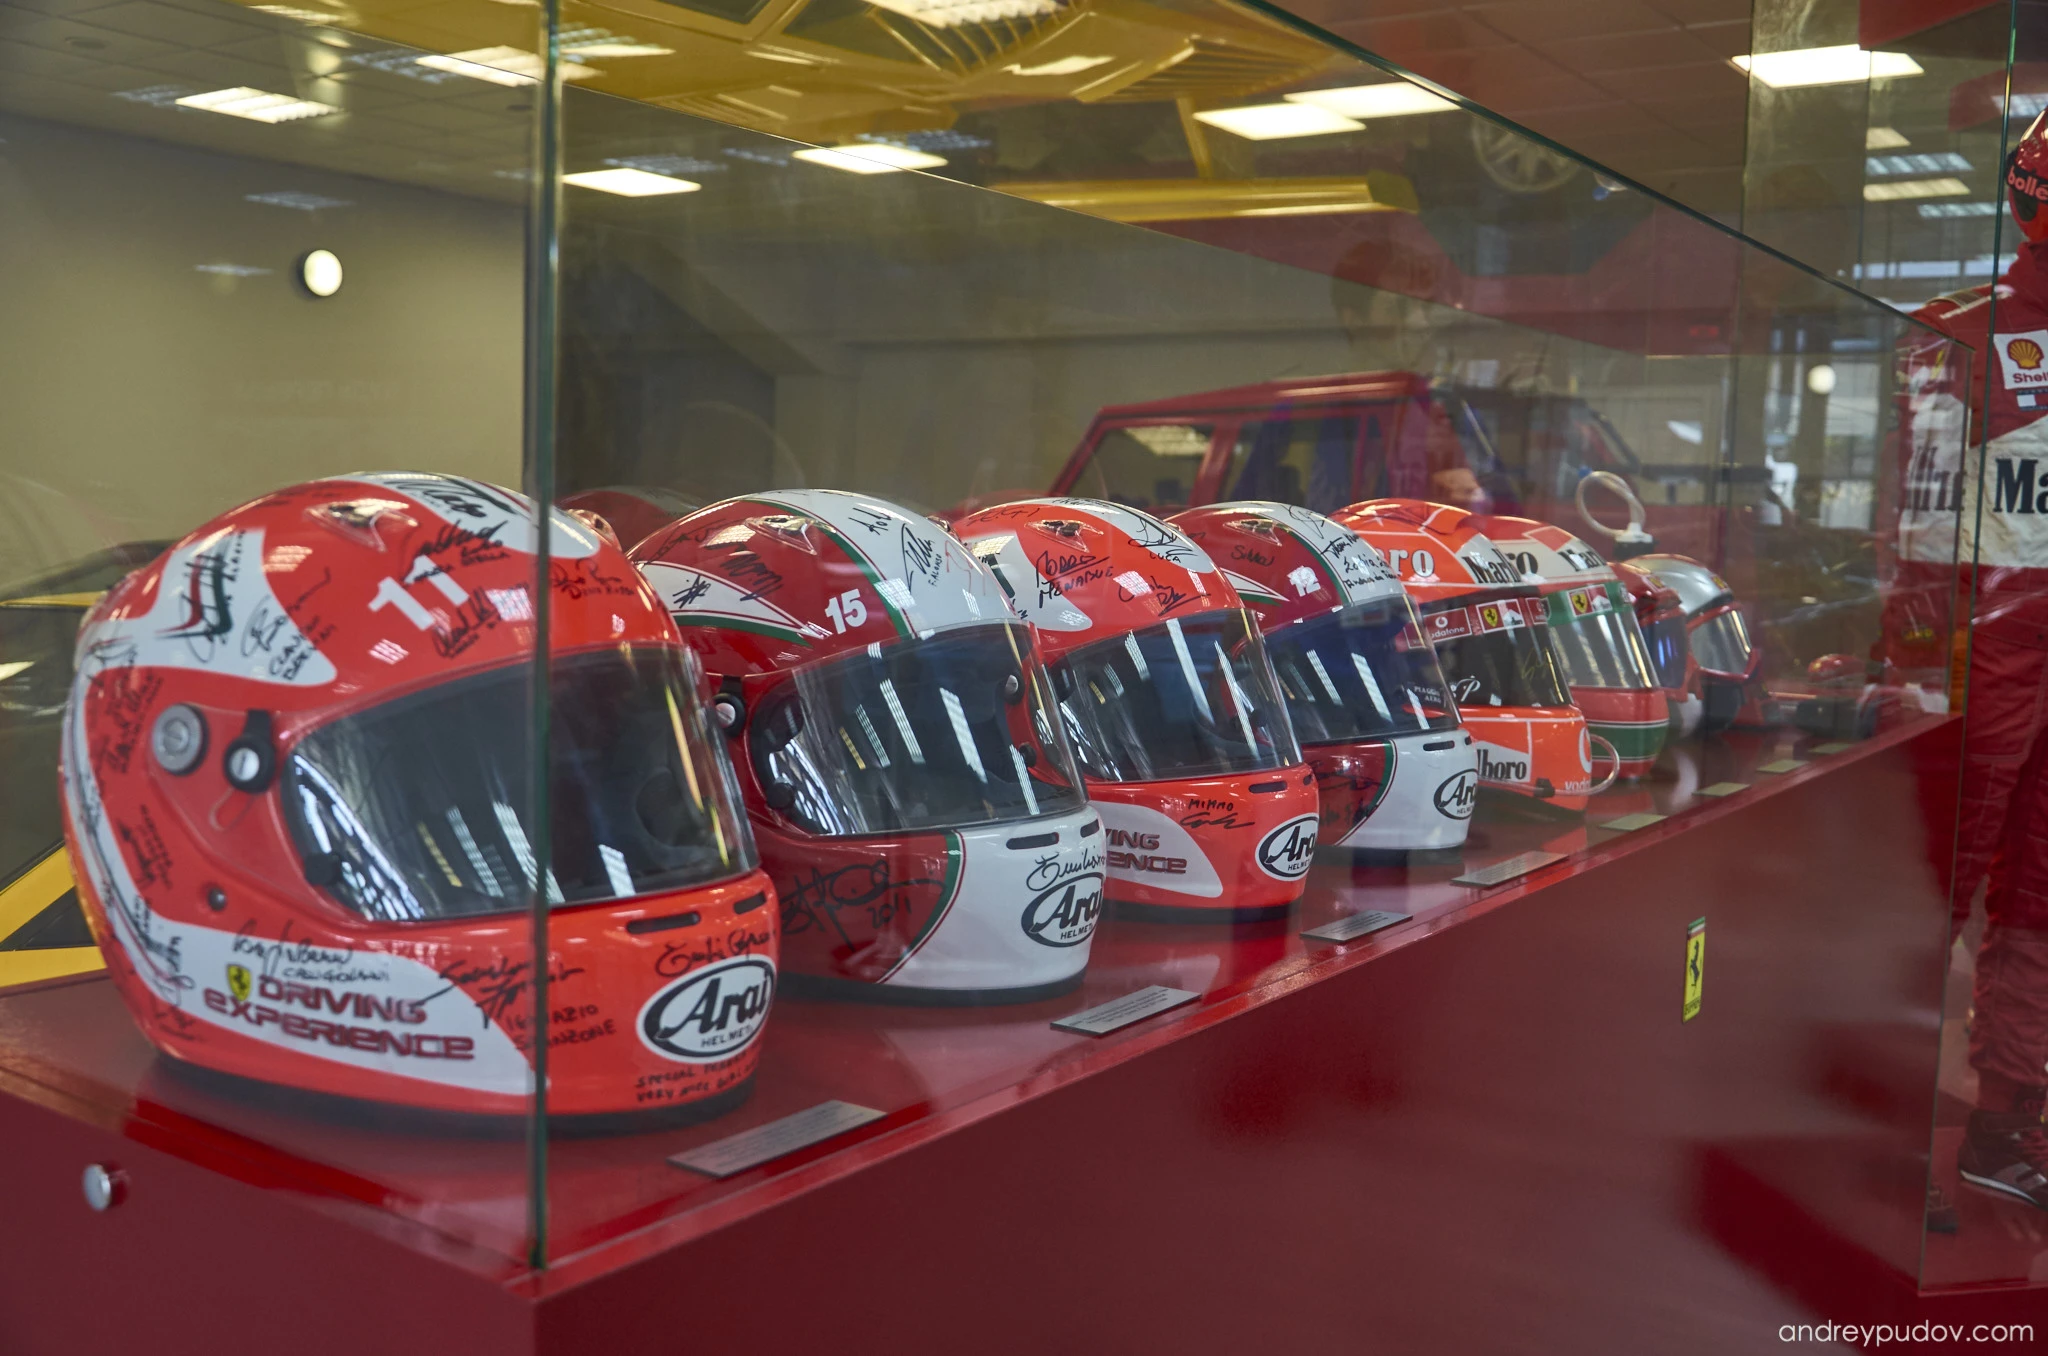 2015 Formula 1 Russian Grand Prix - Scuderia Ferrari helmets at Autosport Museum